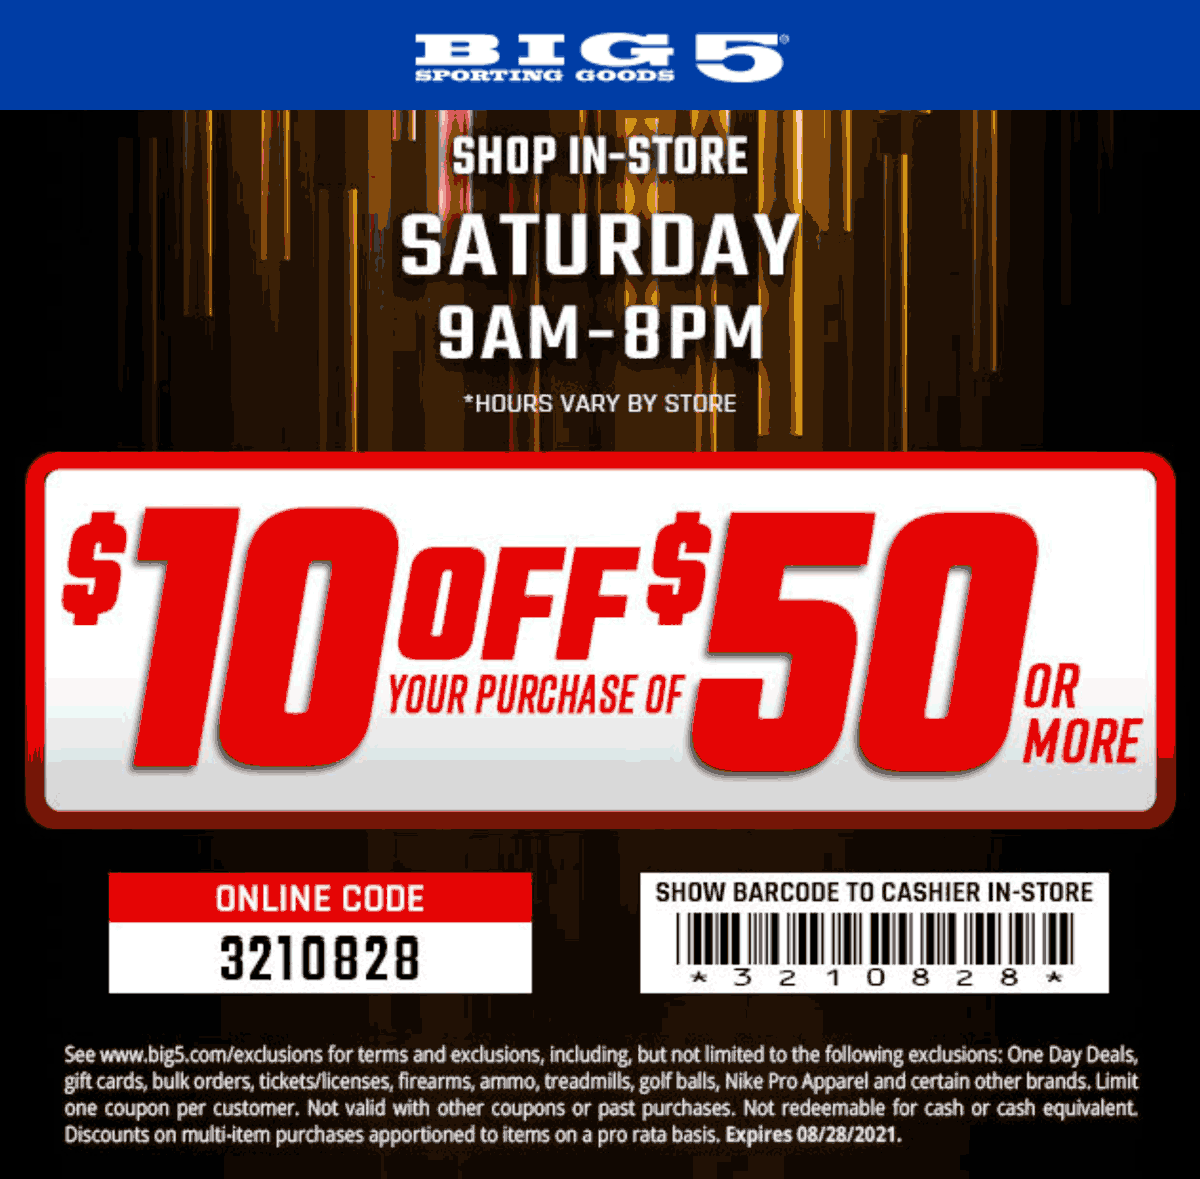 Big 5 stores Coupon  $10 off $50 at Big 5 sporting goods, or online via promo code 3210828 #big5 